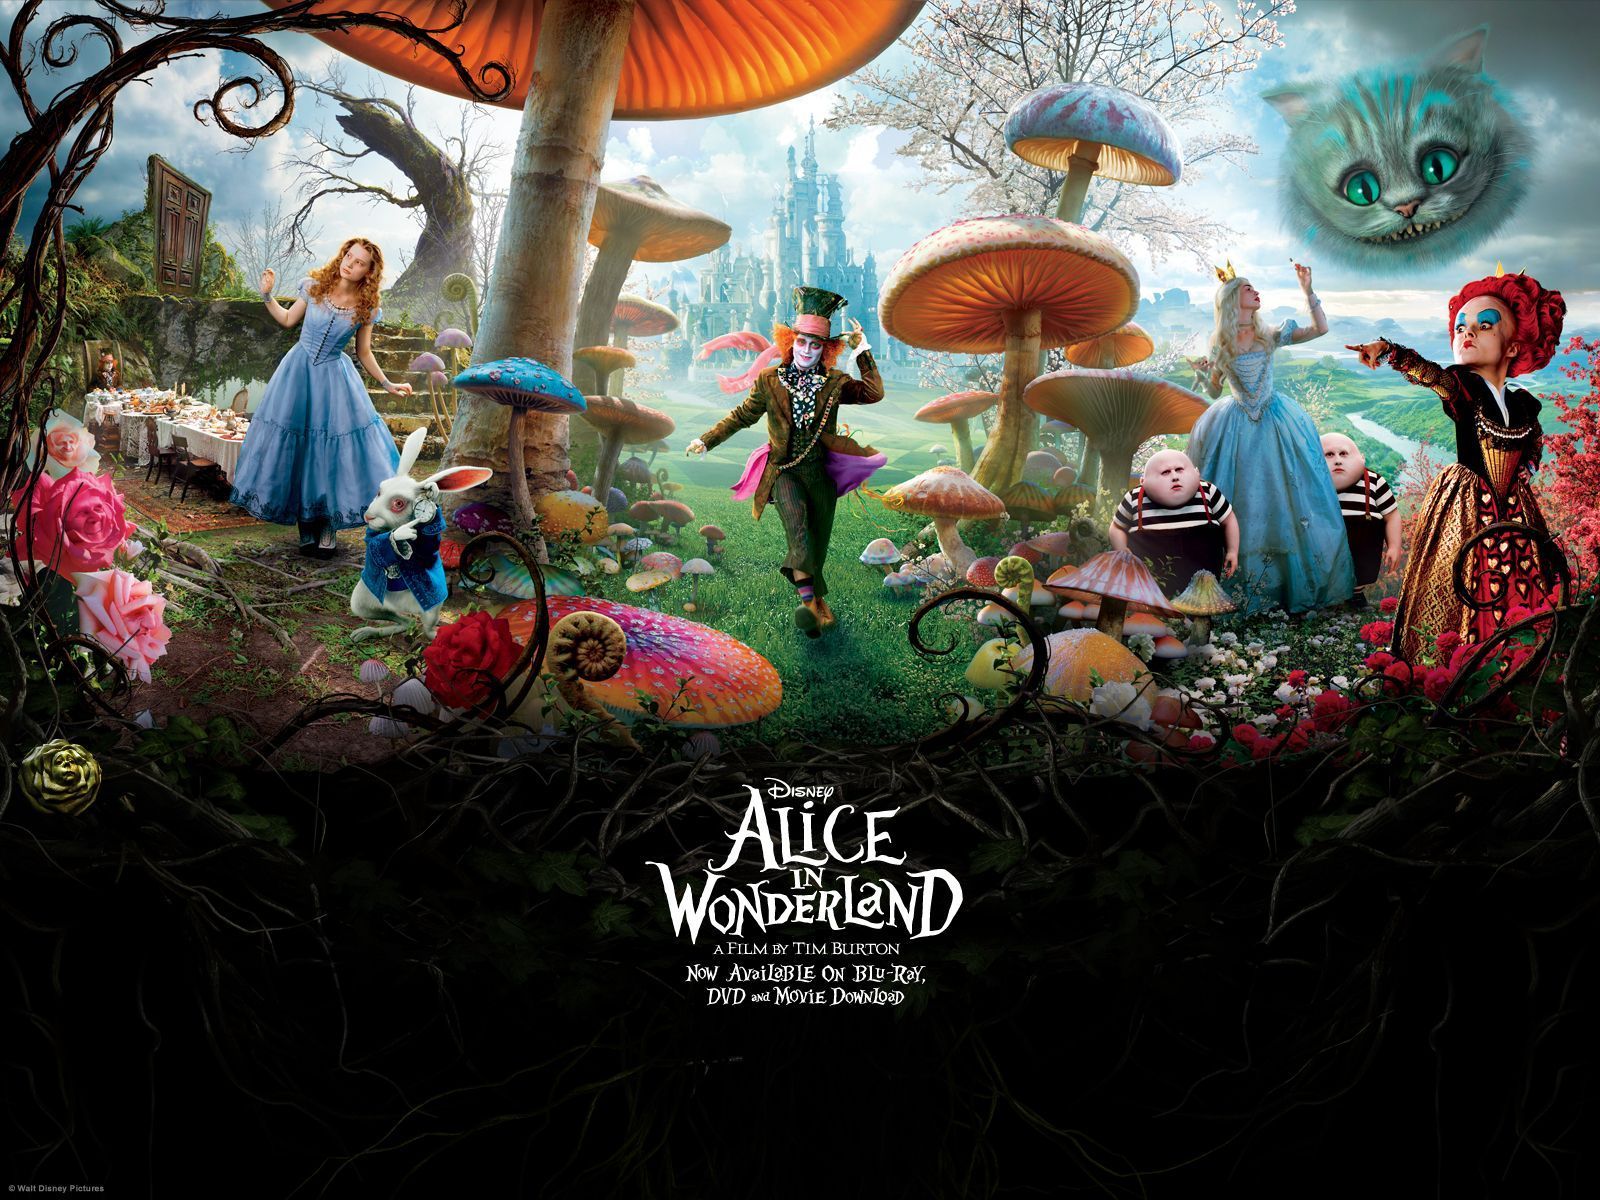 Alice in Wonderland wallpaper - Tim Burton Wallpaper (18698658 ...